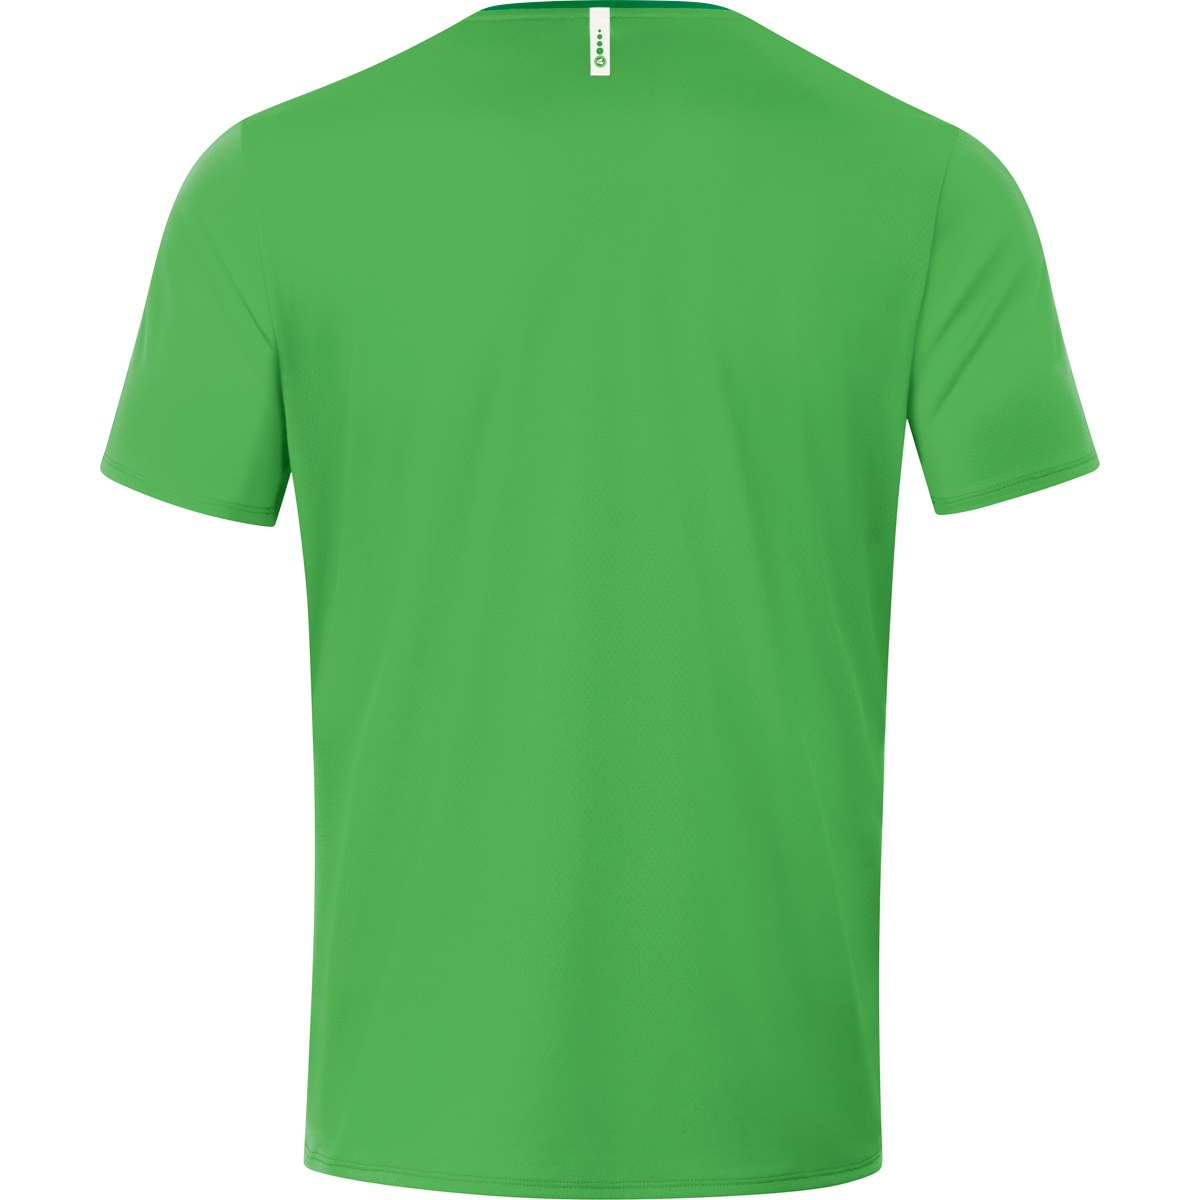 JAKO T-Shirt Champ 2.0 6120 green/sportgrün, Gr. Kinder, soft 116